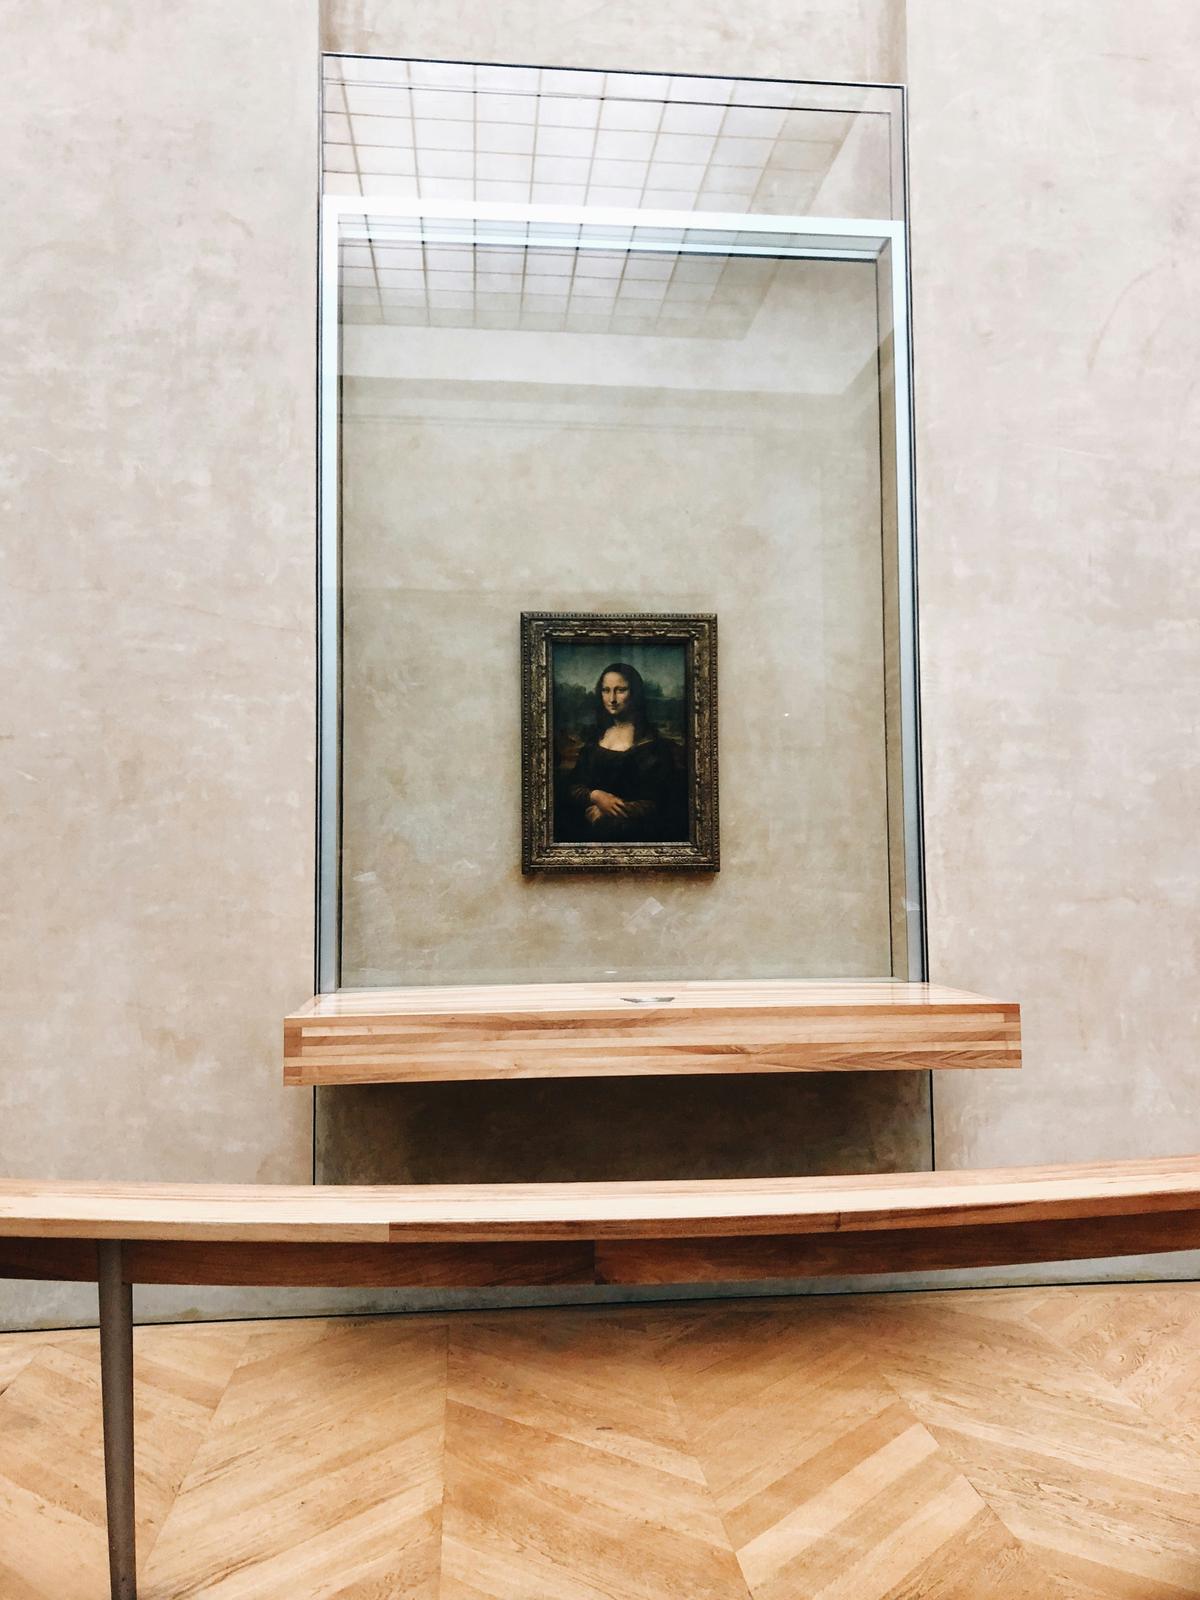 A detailed portrait of Leonardo da Vinci's artwork, showcasing his remarkable skill and innovation.